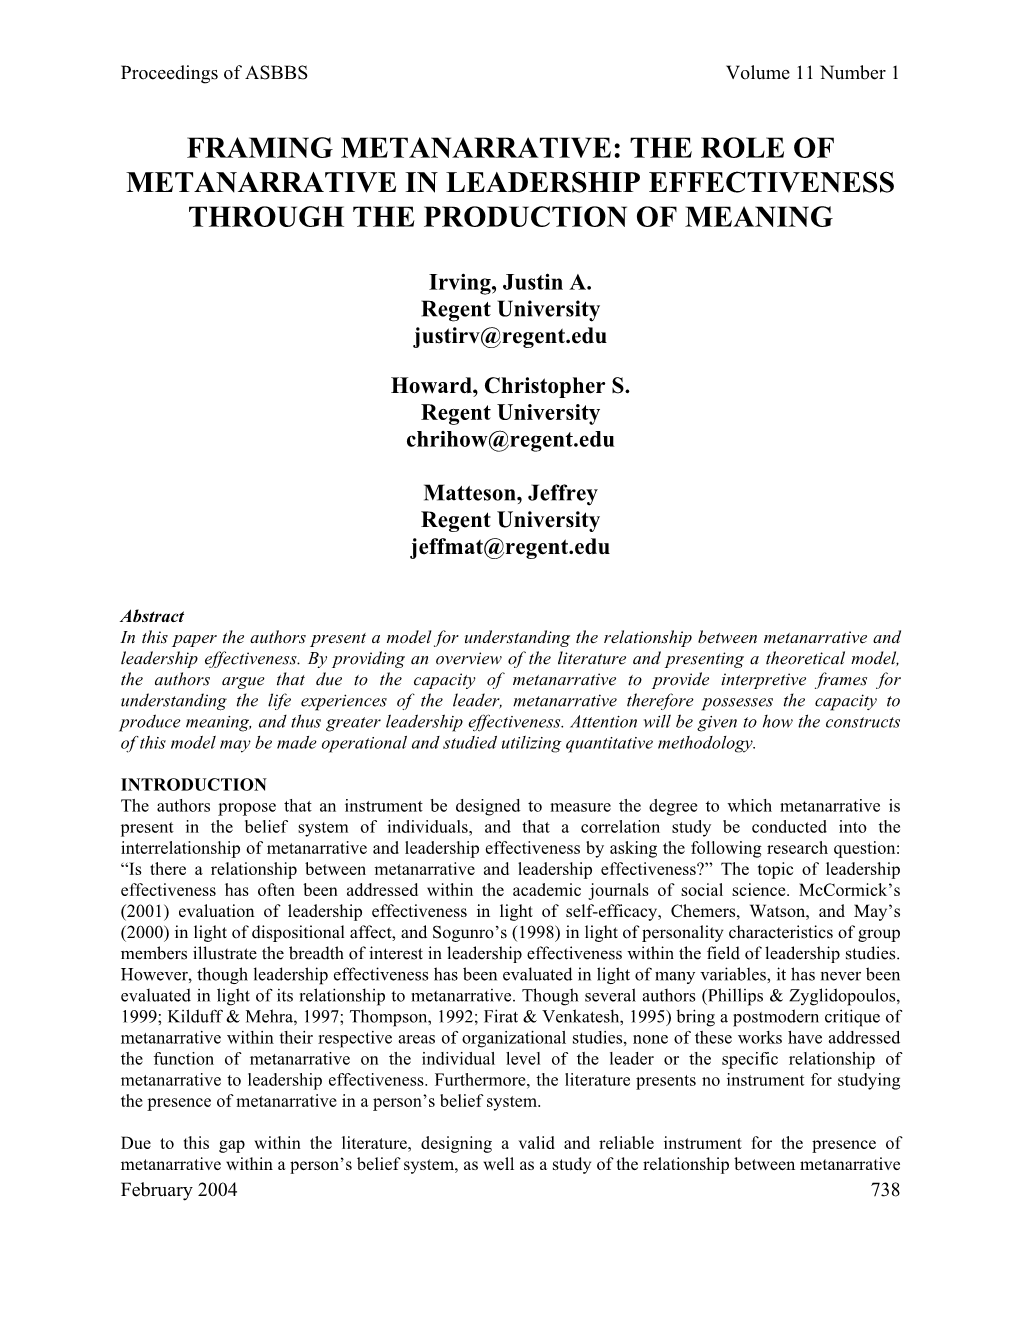 Metanarrative and Leadership Effectiveness